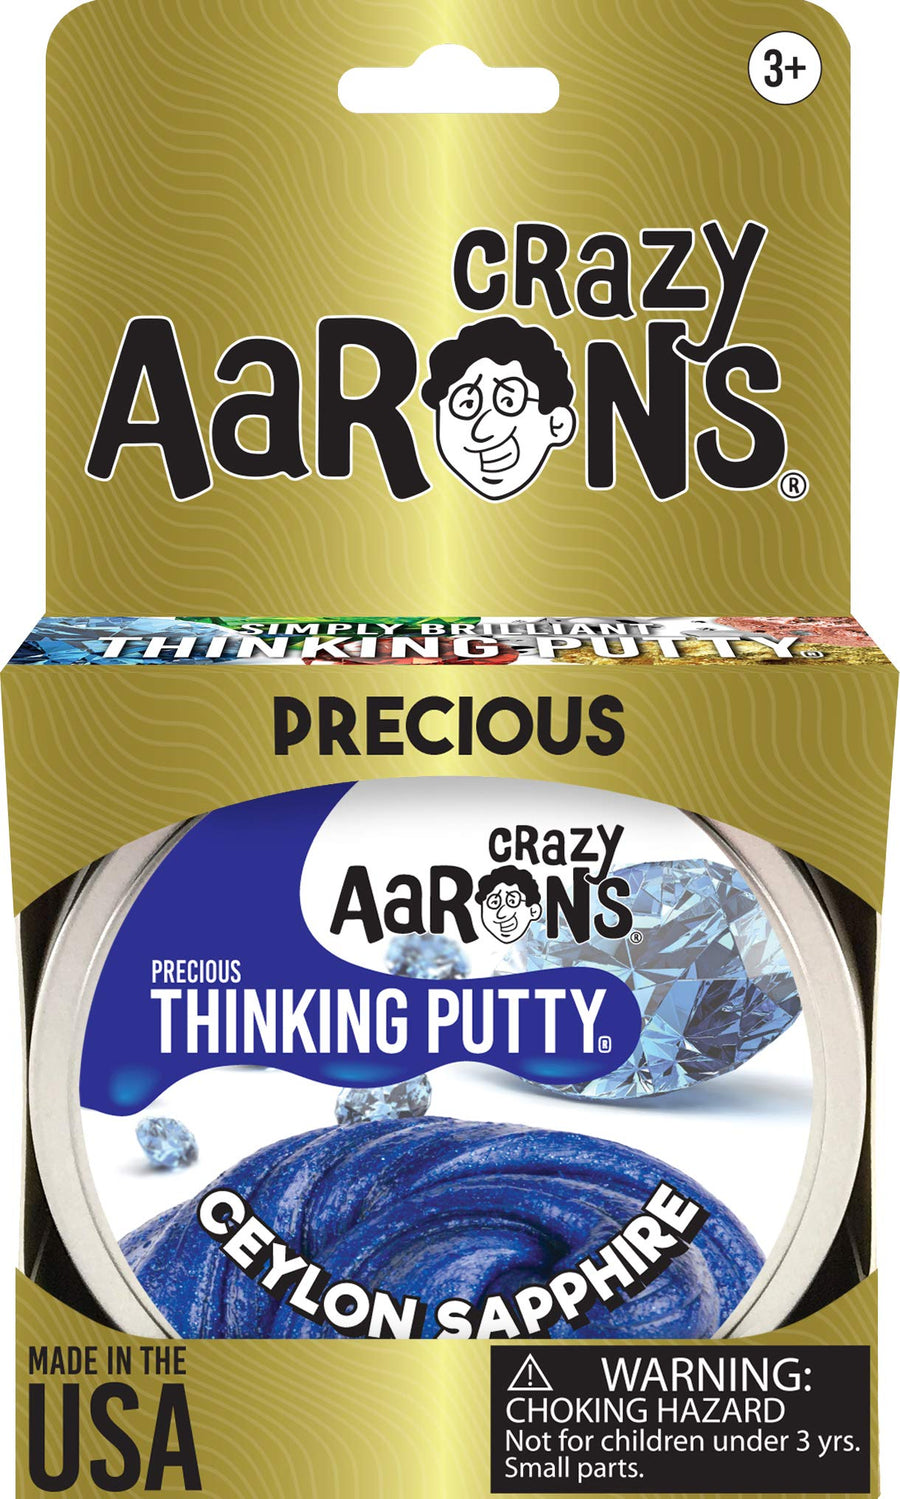 Crazy Aaron's Thinking Putty, 1.6 Ounce, Precious Gems Ceylon Sapphire